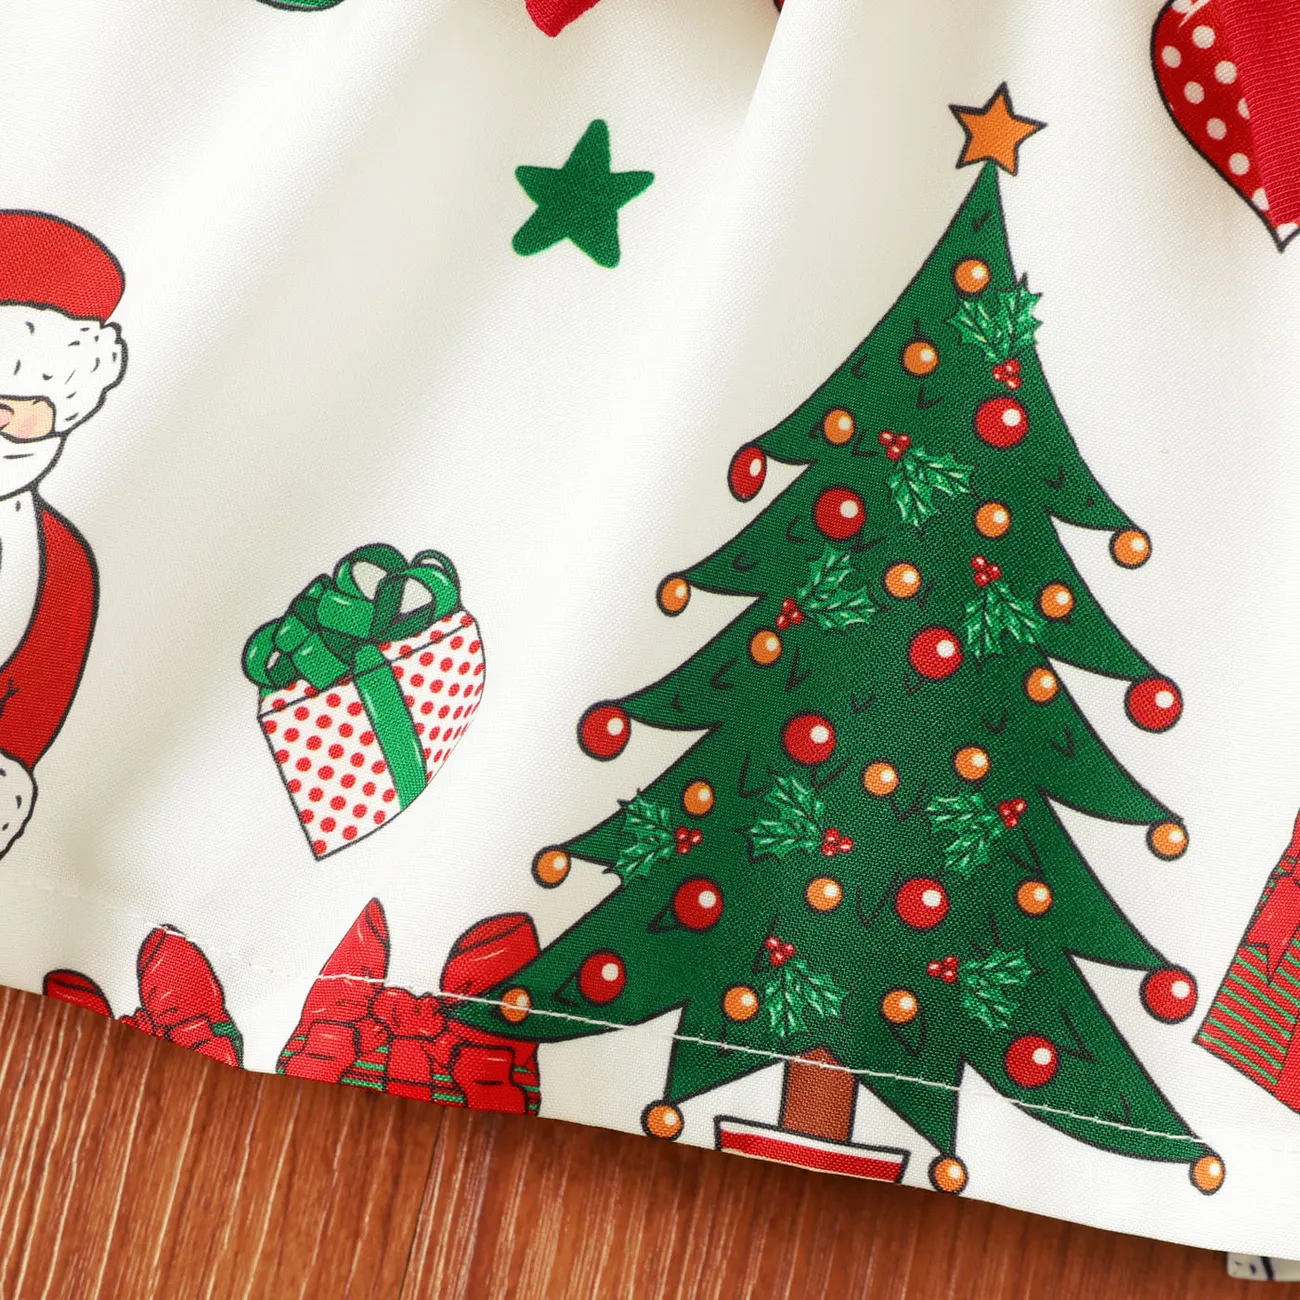 Christmas Baby Girl Childlike pattern  Bowknot Design Dress Or Skirt Set  Red-1 big image 1